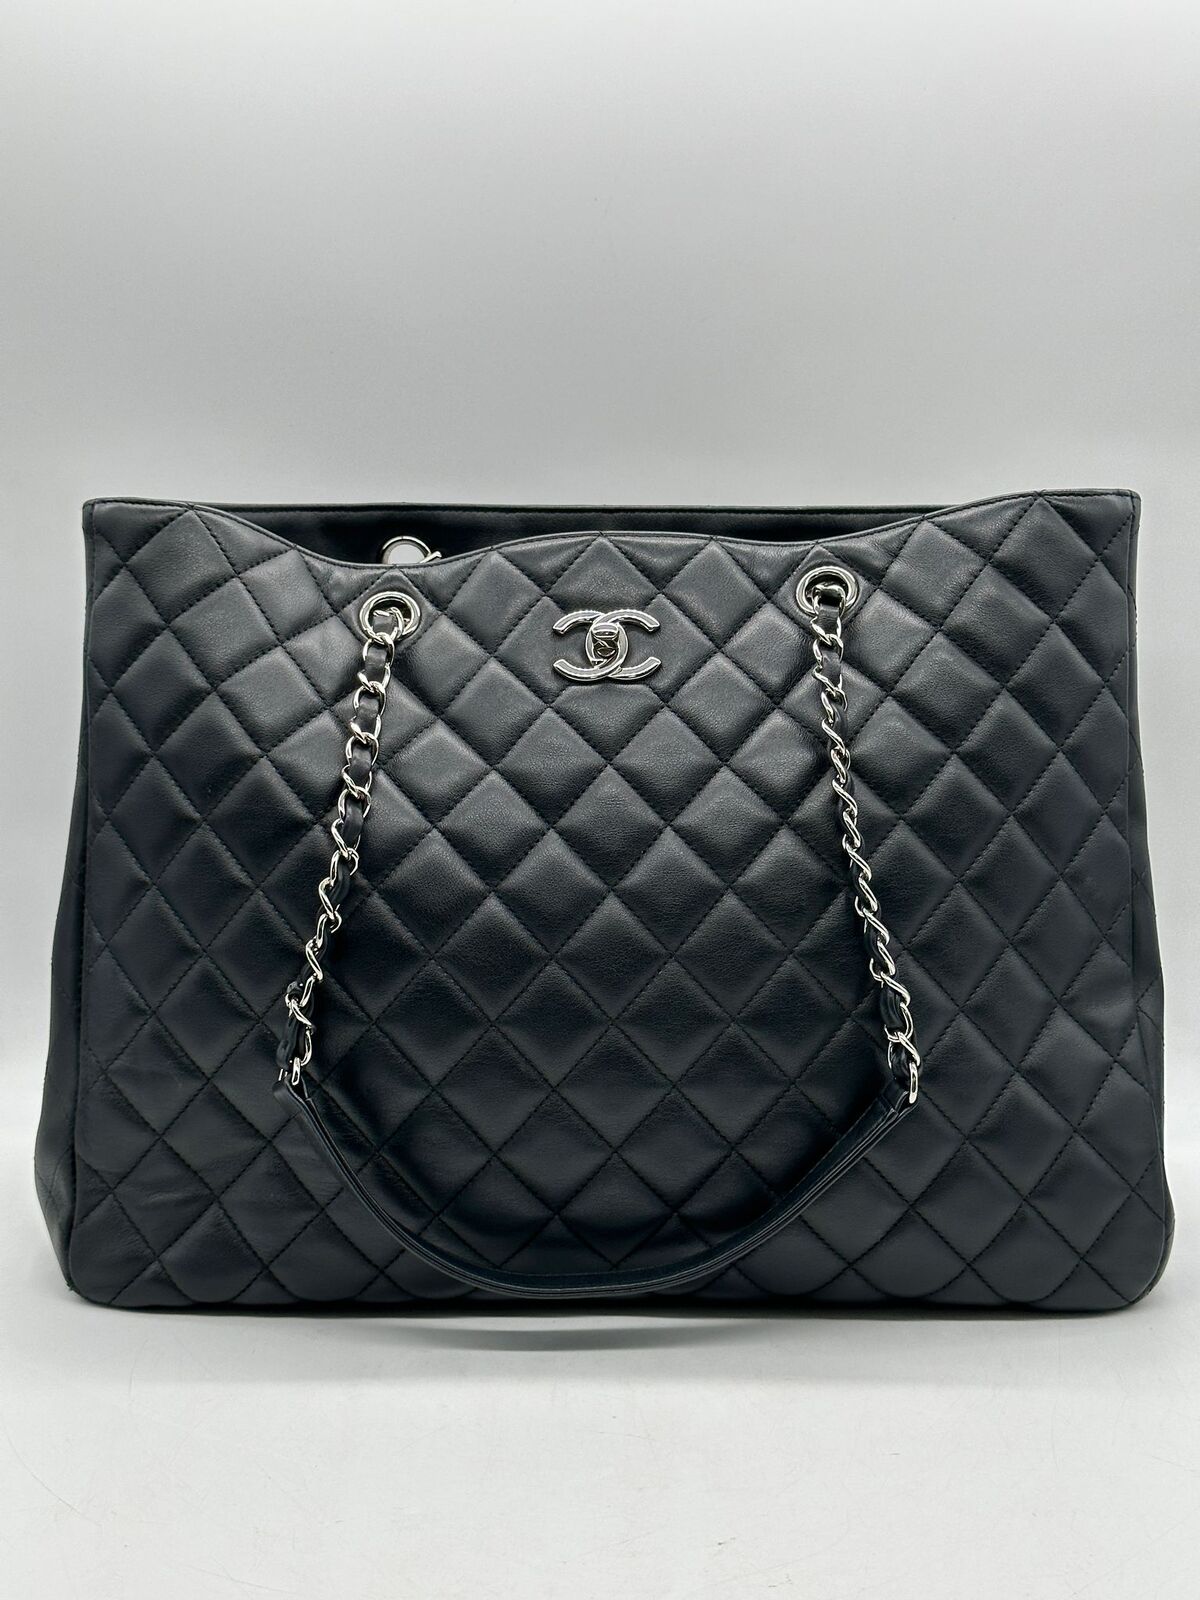 Chanel Vintage Chanel Black Caviar Leather Large Tote Bag